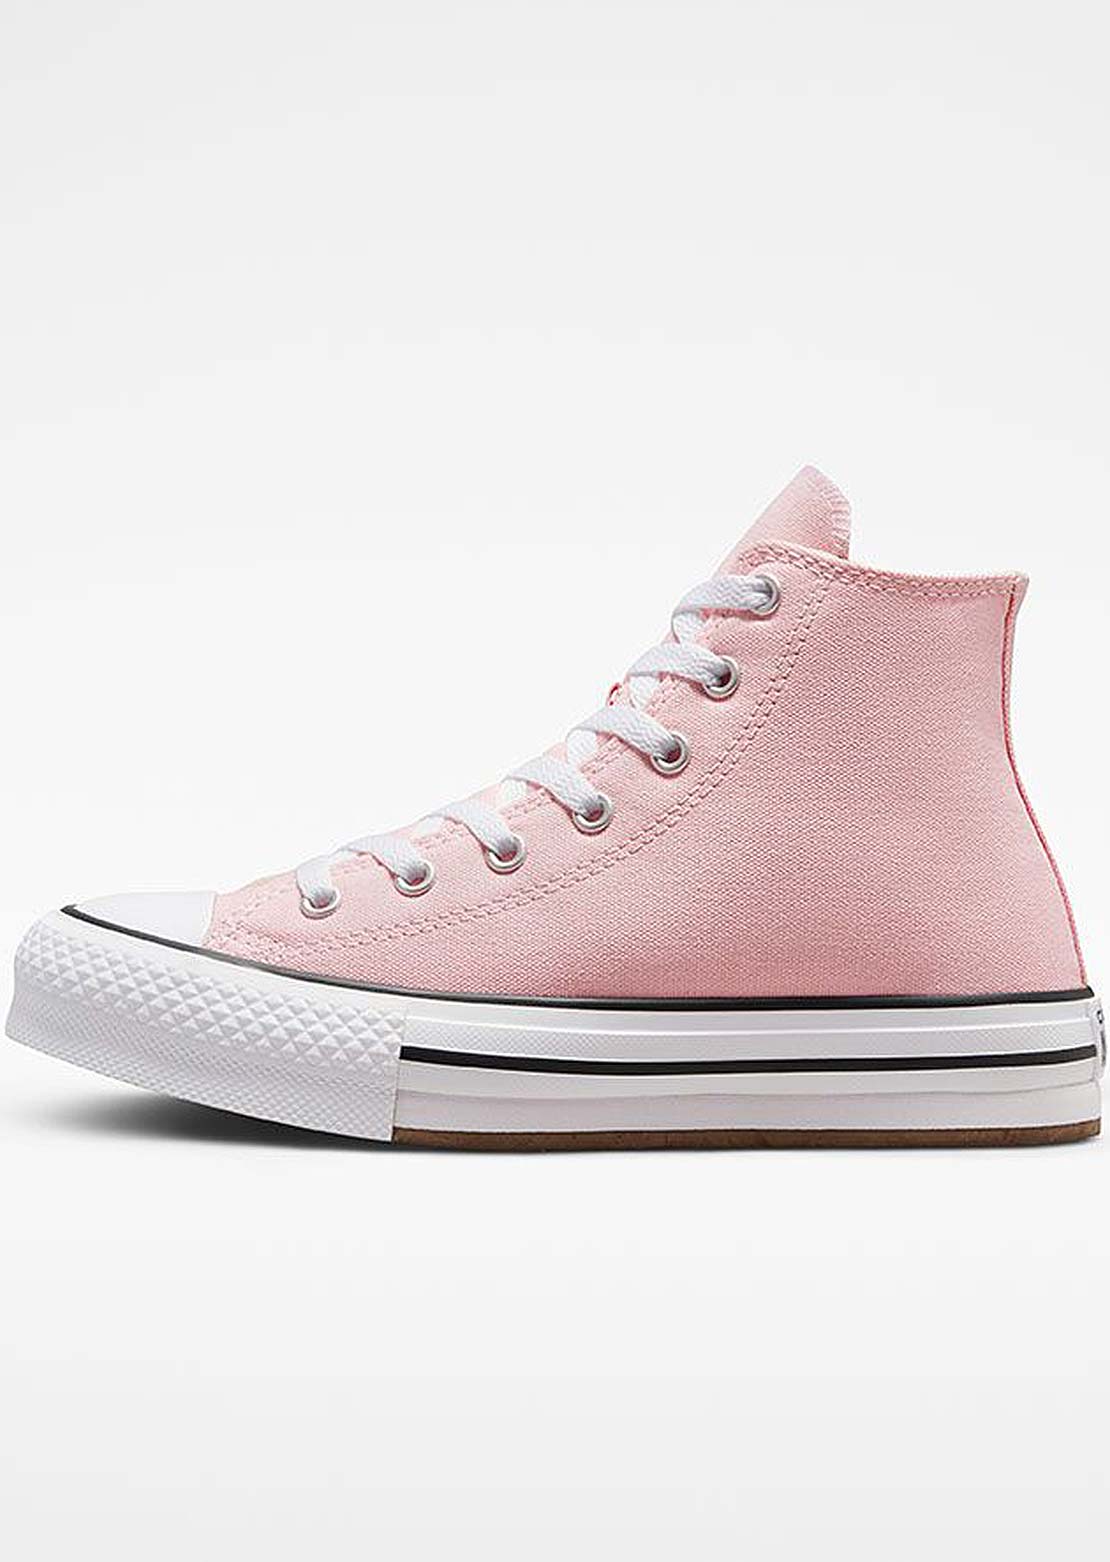 Converse Junior Chuck Taylor All Star Eva Lift Platform Shoes Sunrise Pink/White/Black